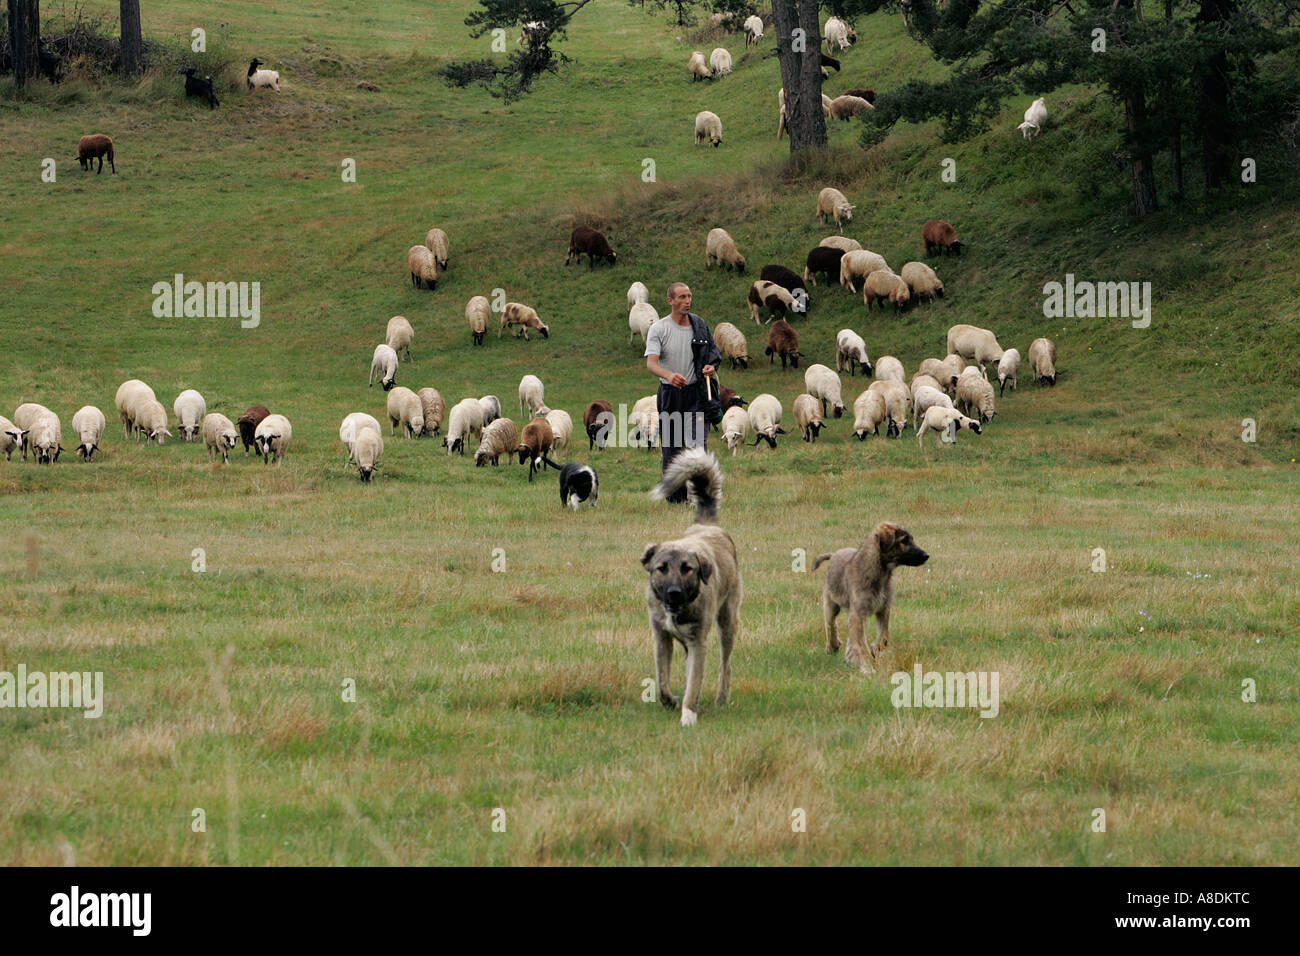 Shepherd drove herd dog sheep flock rural Bulgaria Republic Balkan Peninsula south east Europe travel tourism icon iconic Stock Photo